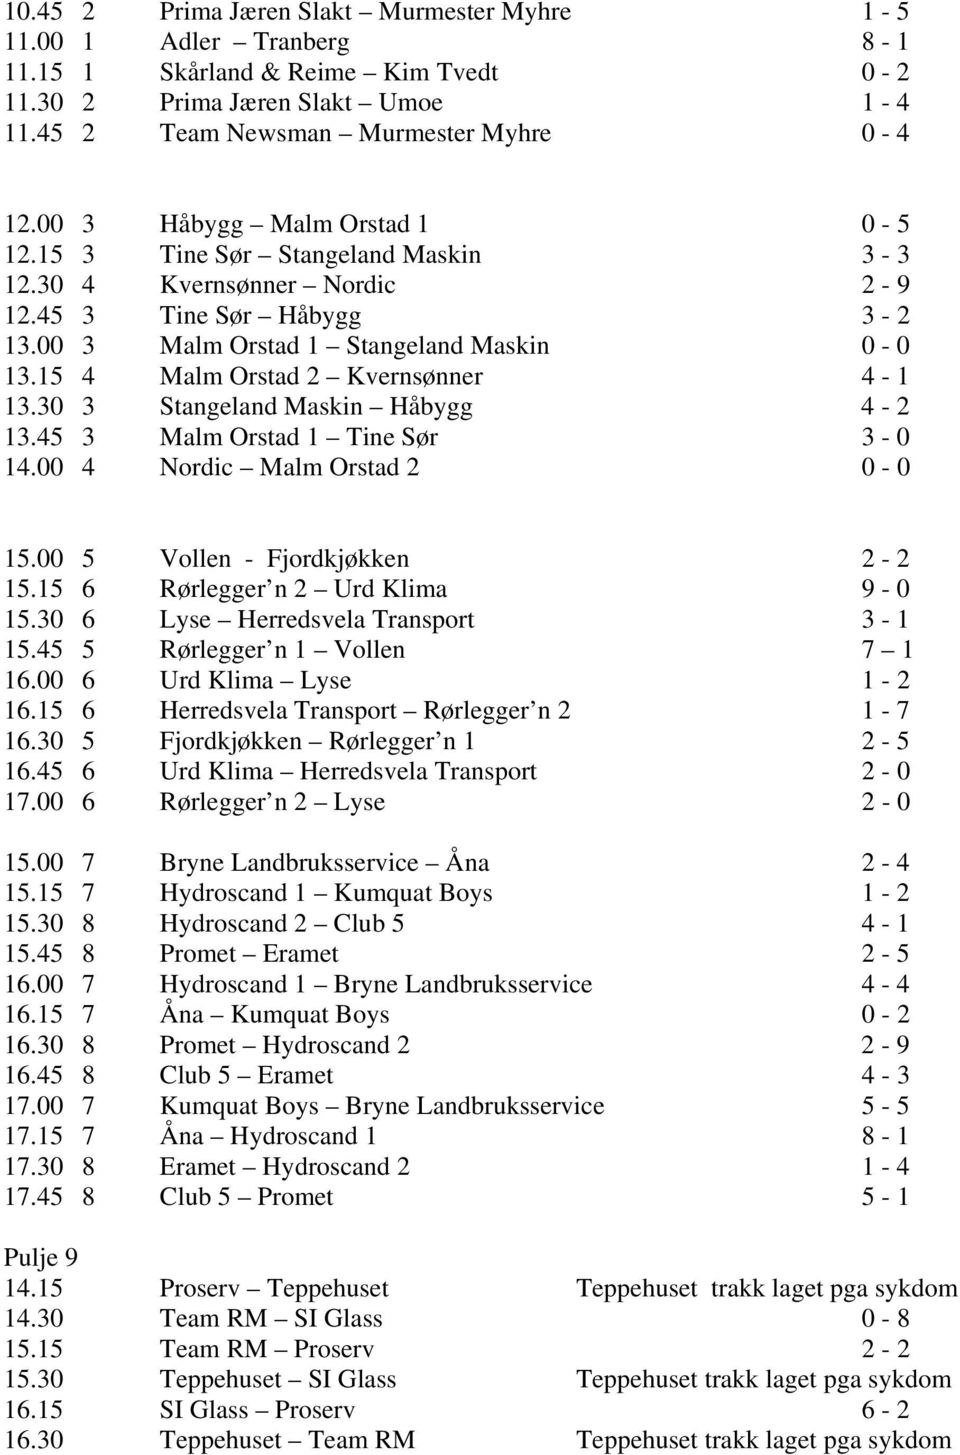 15 4 Malm Orstad 2 Kvernsønner 4-1 13.30 3 Stangeland Maskin Håbygg 4-2 13.45 3 Malm Orstad 1 Tine Sør 3-0 14.00 4 Nordic Malm Orstad 2 0-0 15.00 5 Vollen - Fjordkjøkken 2-2 15.